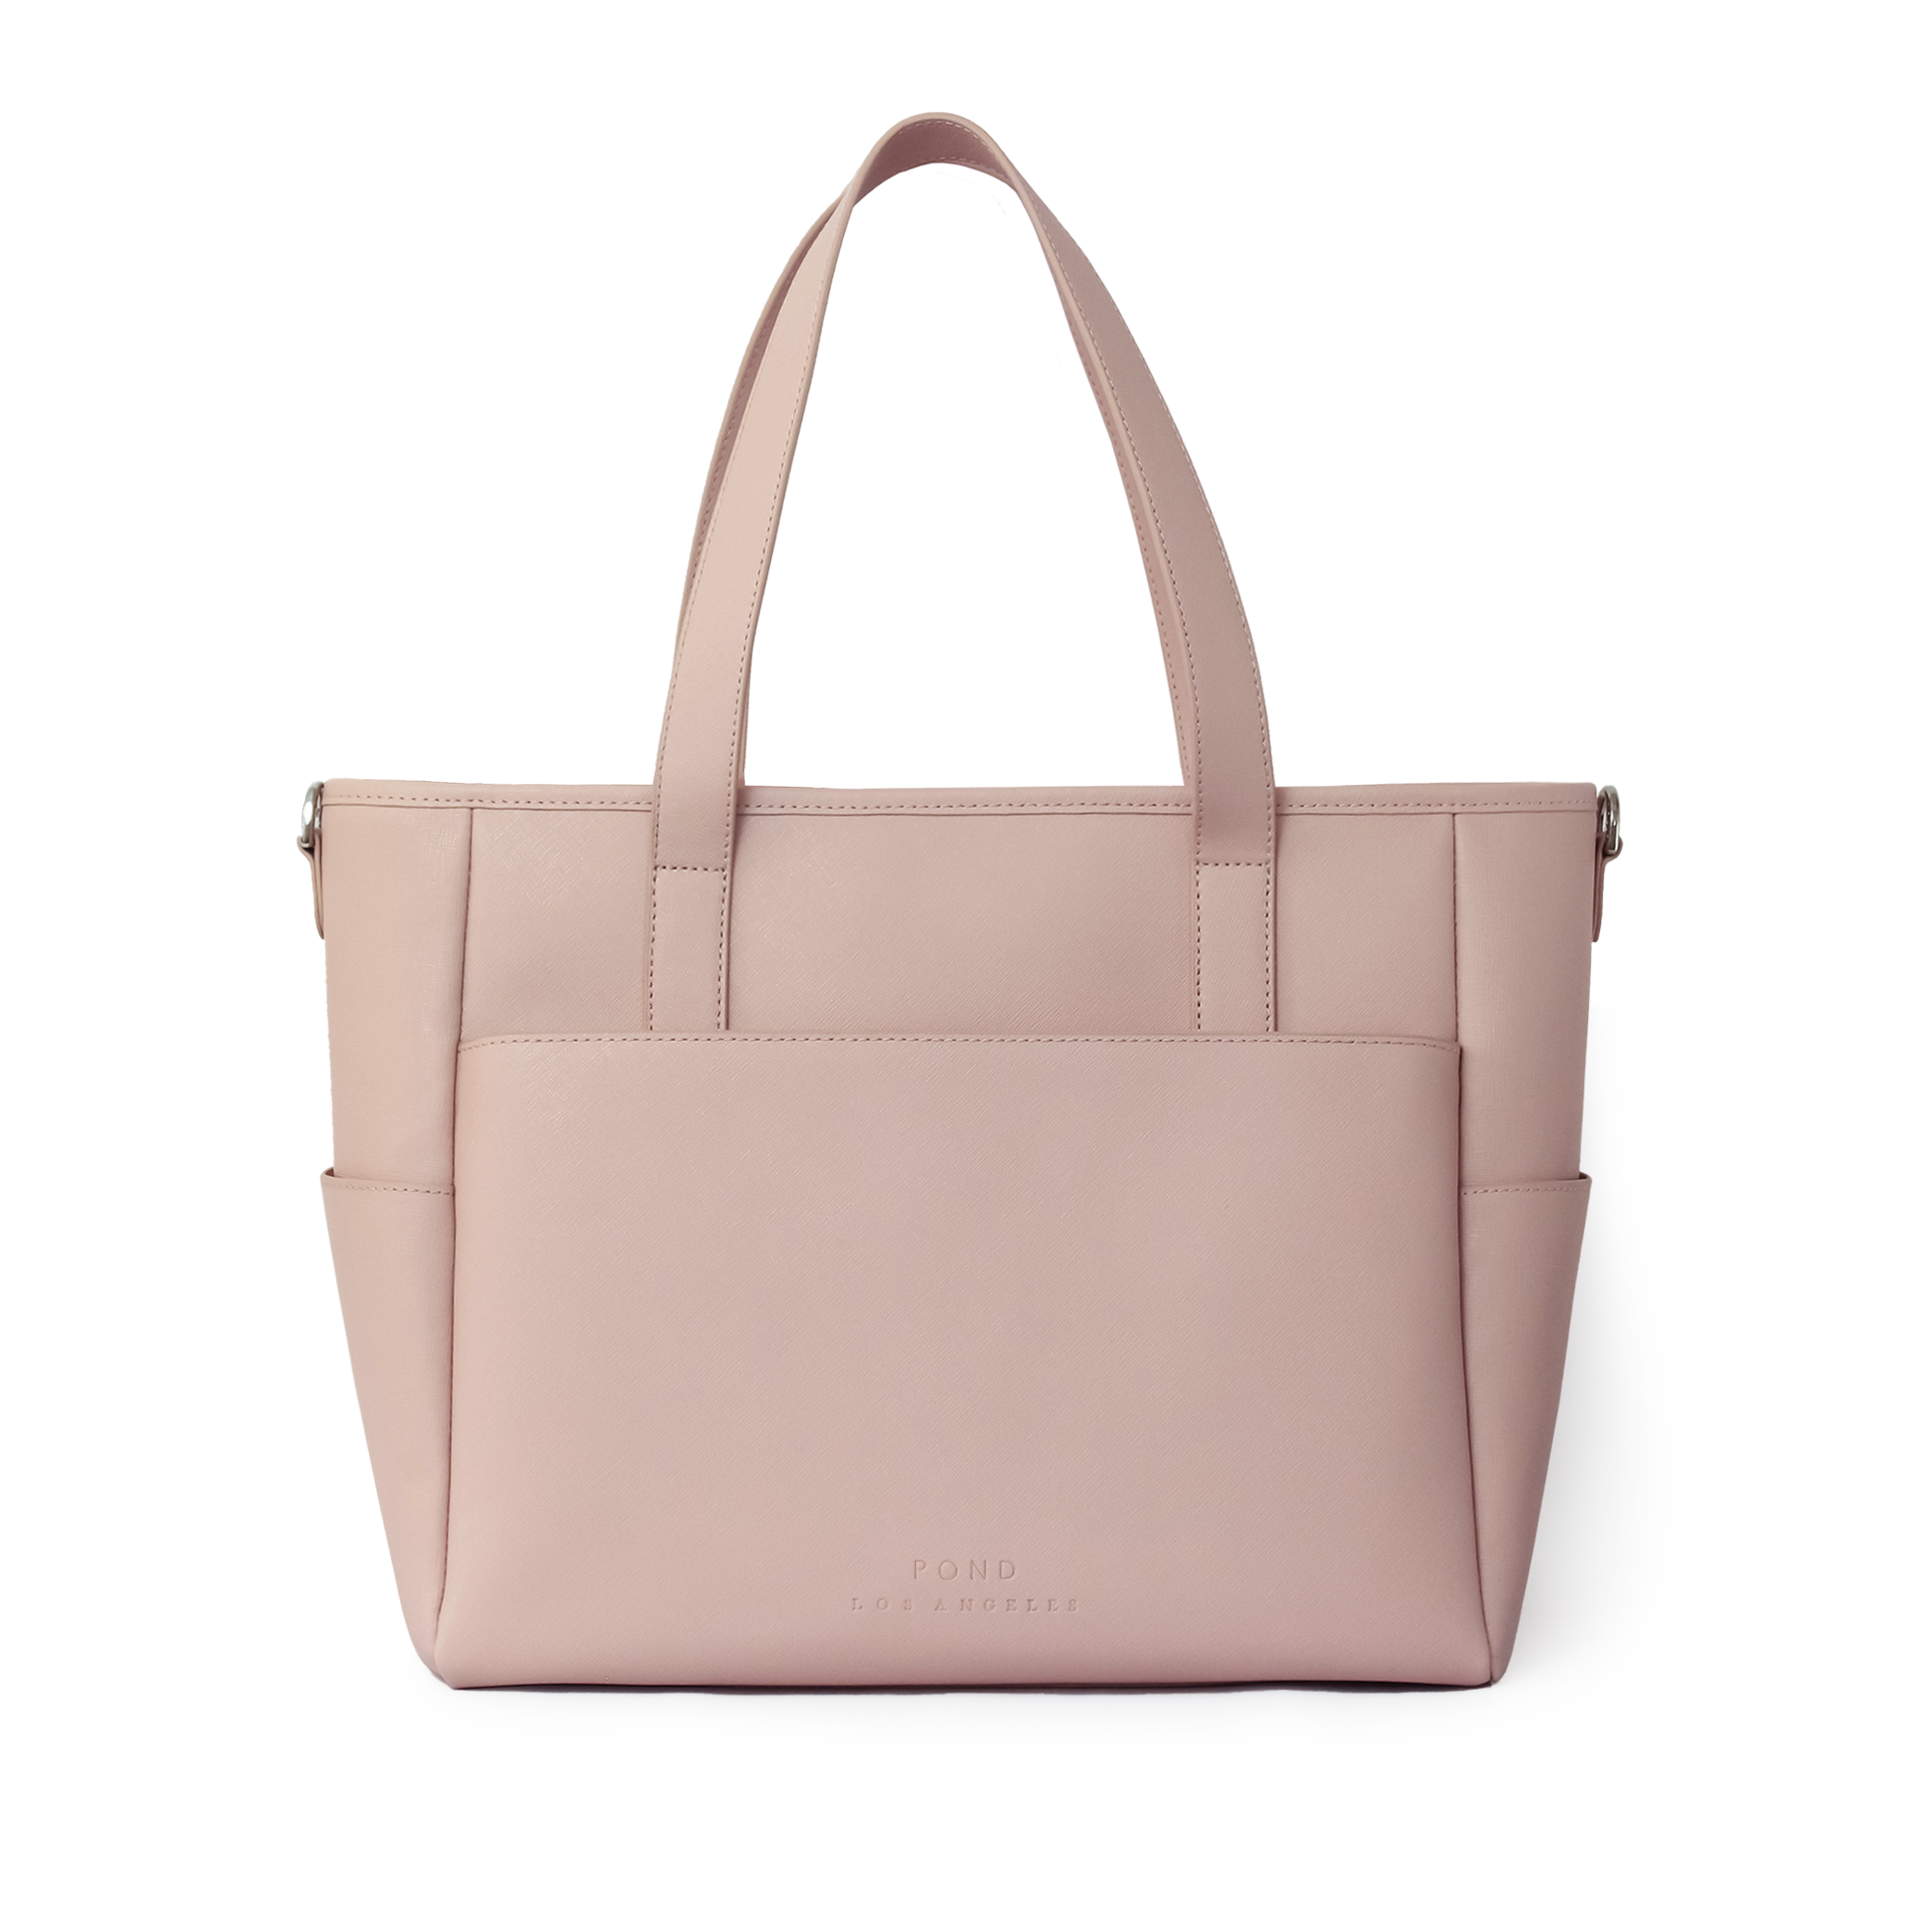 Buy I Define You Faux Leather Girls' Women's Medium Handbag and Sling Bag  Combo | Shoulder Bag | Ladies Purse (Set of 2) (Black) at Amazon.in